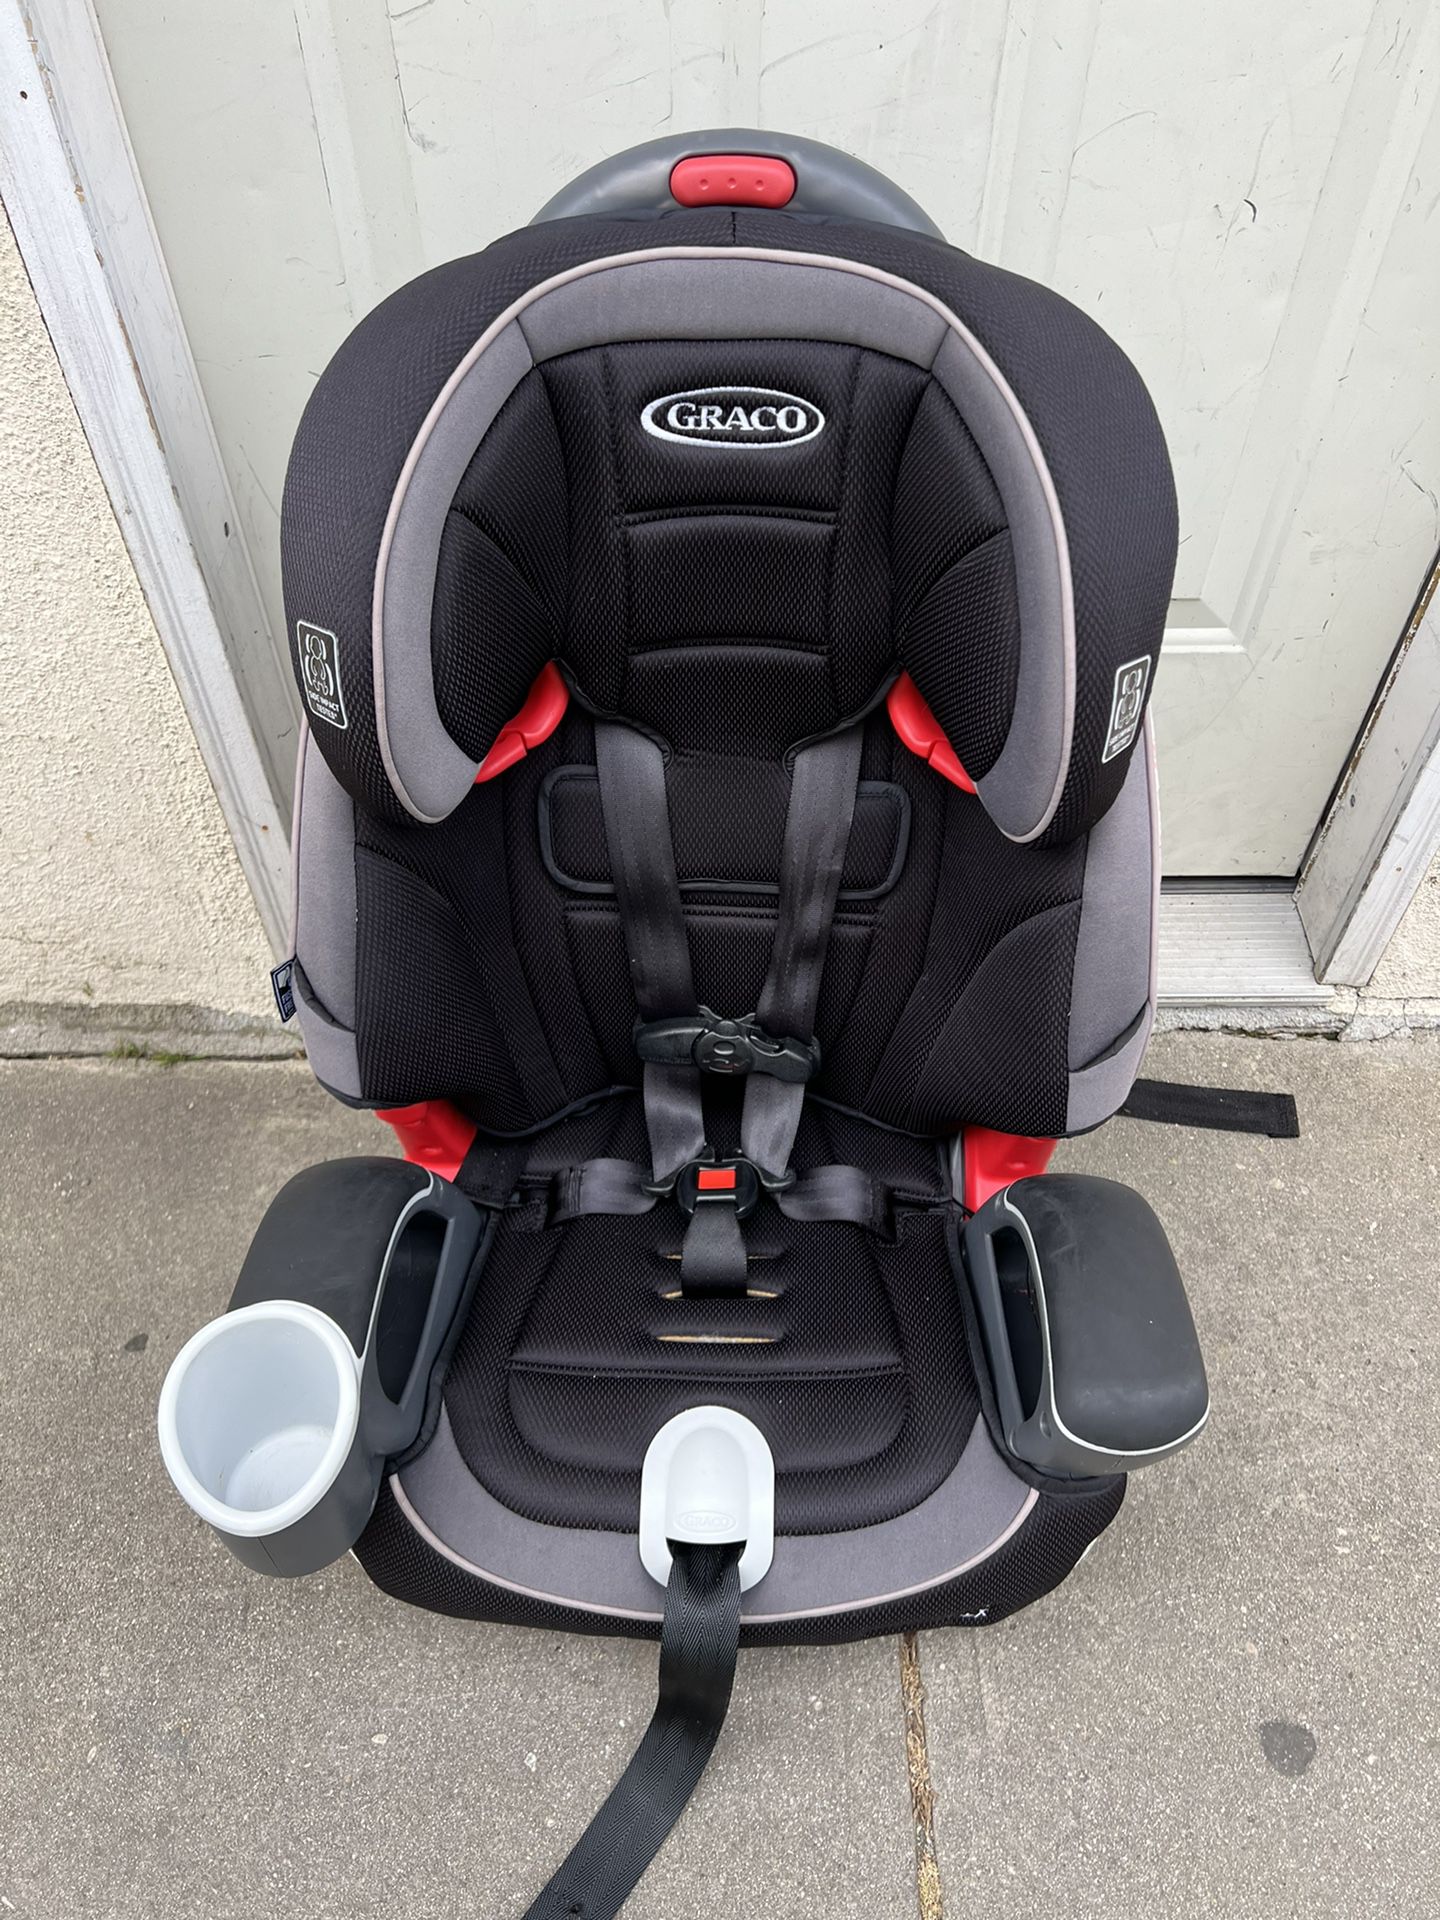 Graco Slim-Fit 3 in 1 Car Seat for Sale in Colma, CA - OfferUp